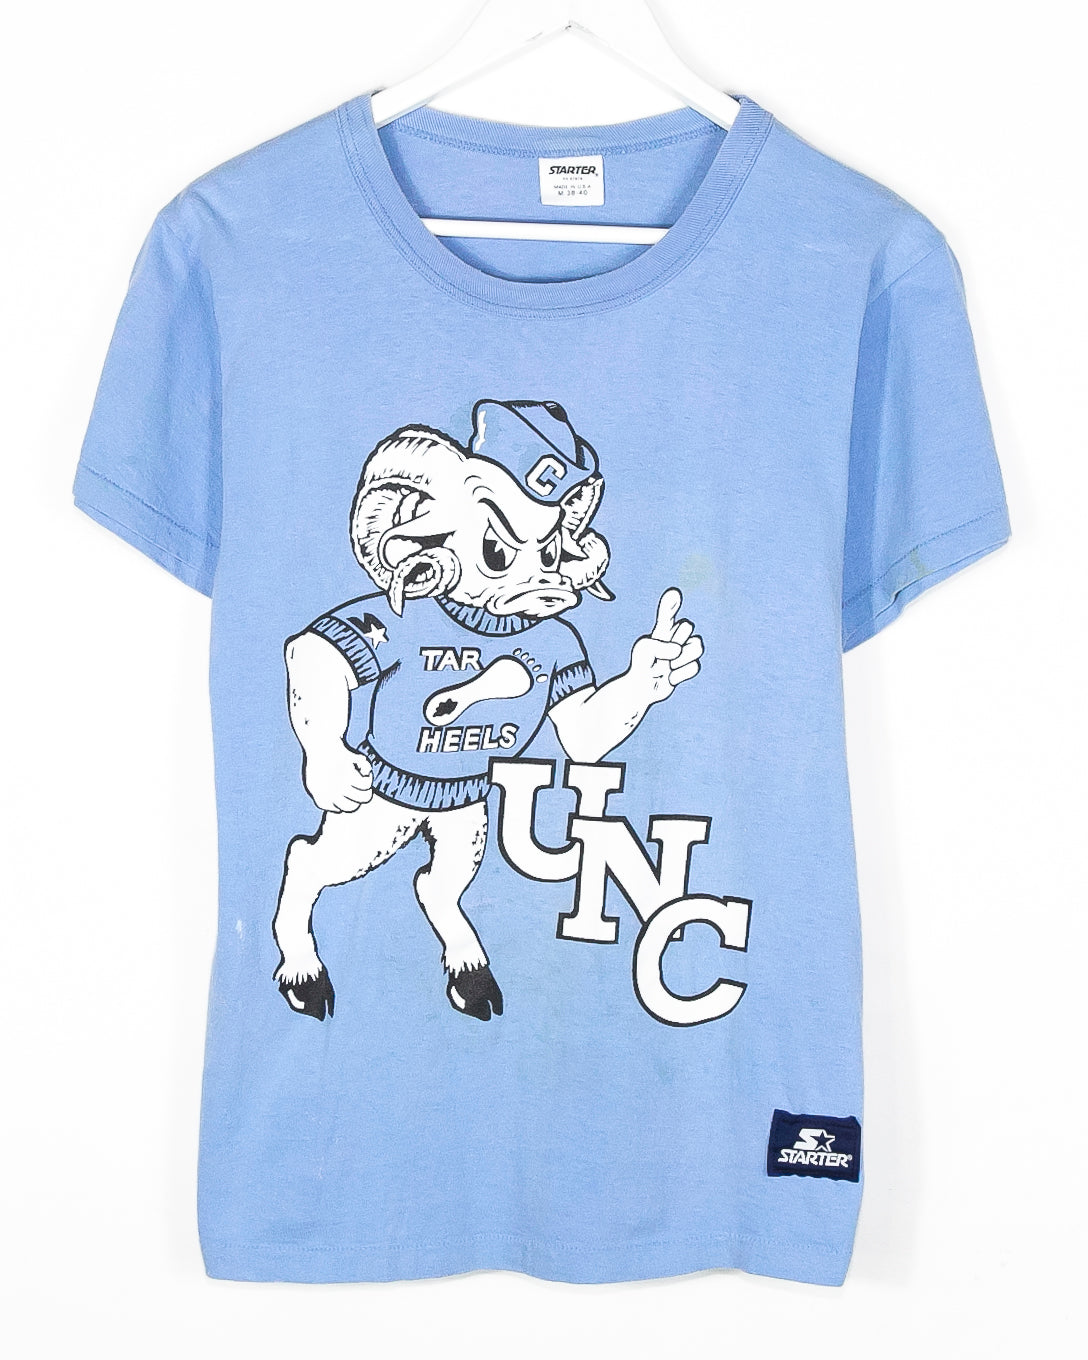 Vintage UNC Tar Heels starter 90s T-shirt (M)